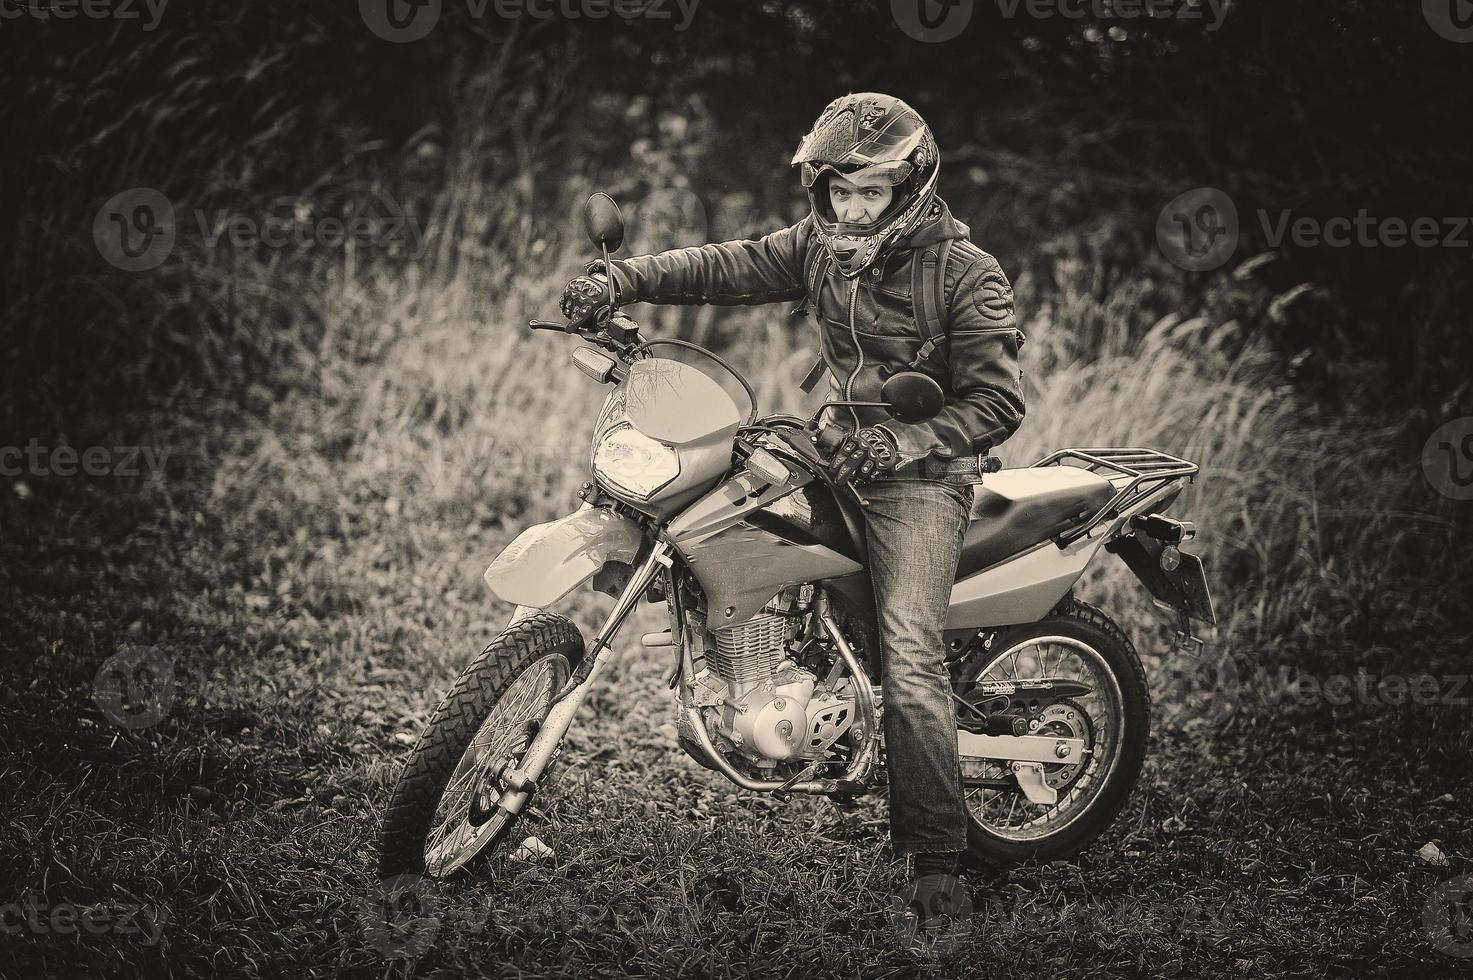 corredor de enduro sentado en su motocicleta foto